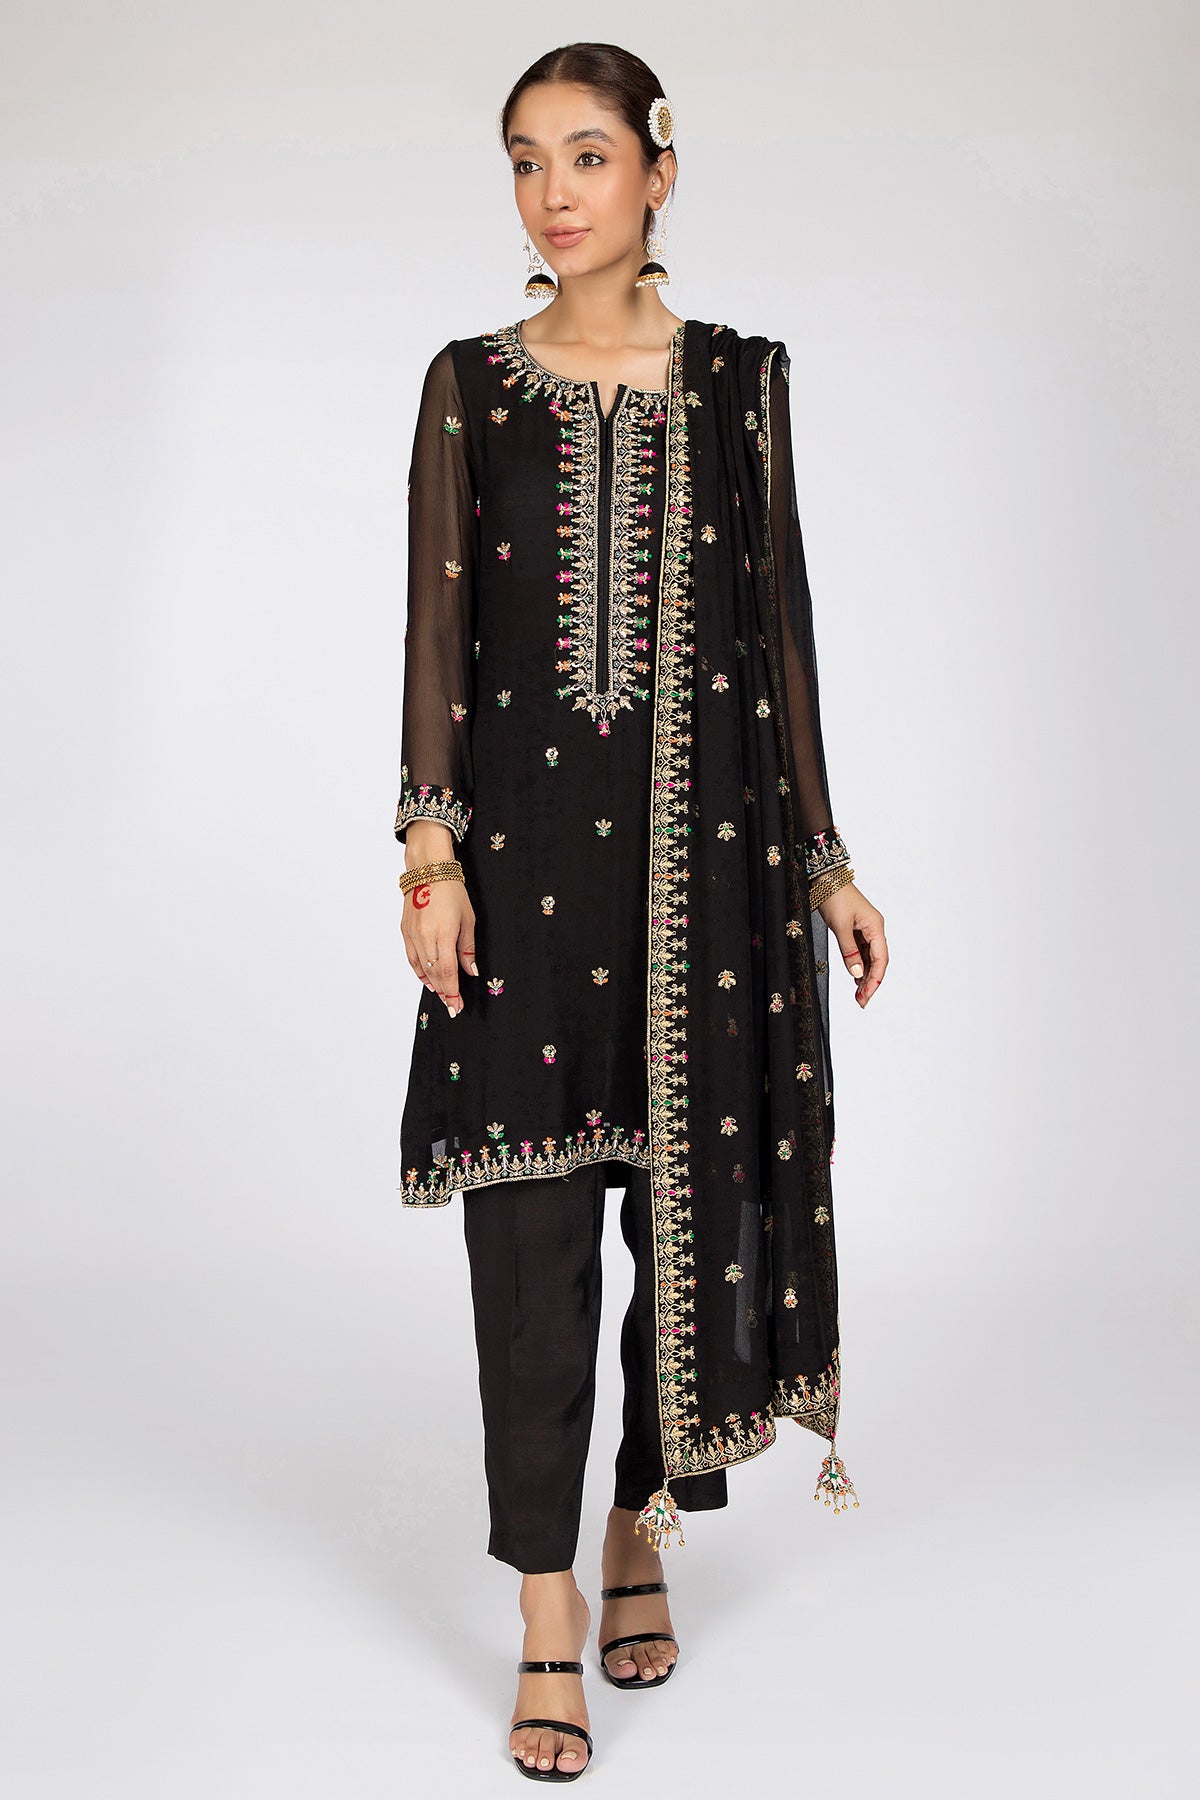 3 Piece Pk Chiffon Suit – Kayseria Pakistan